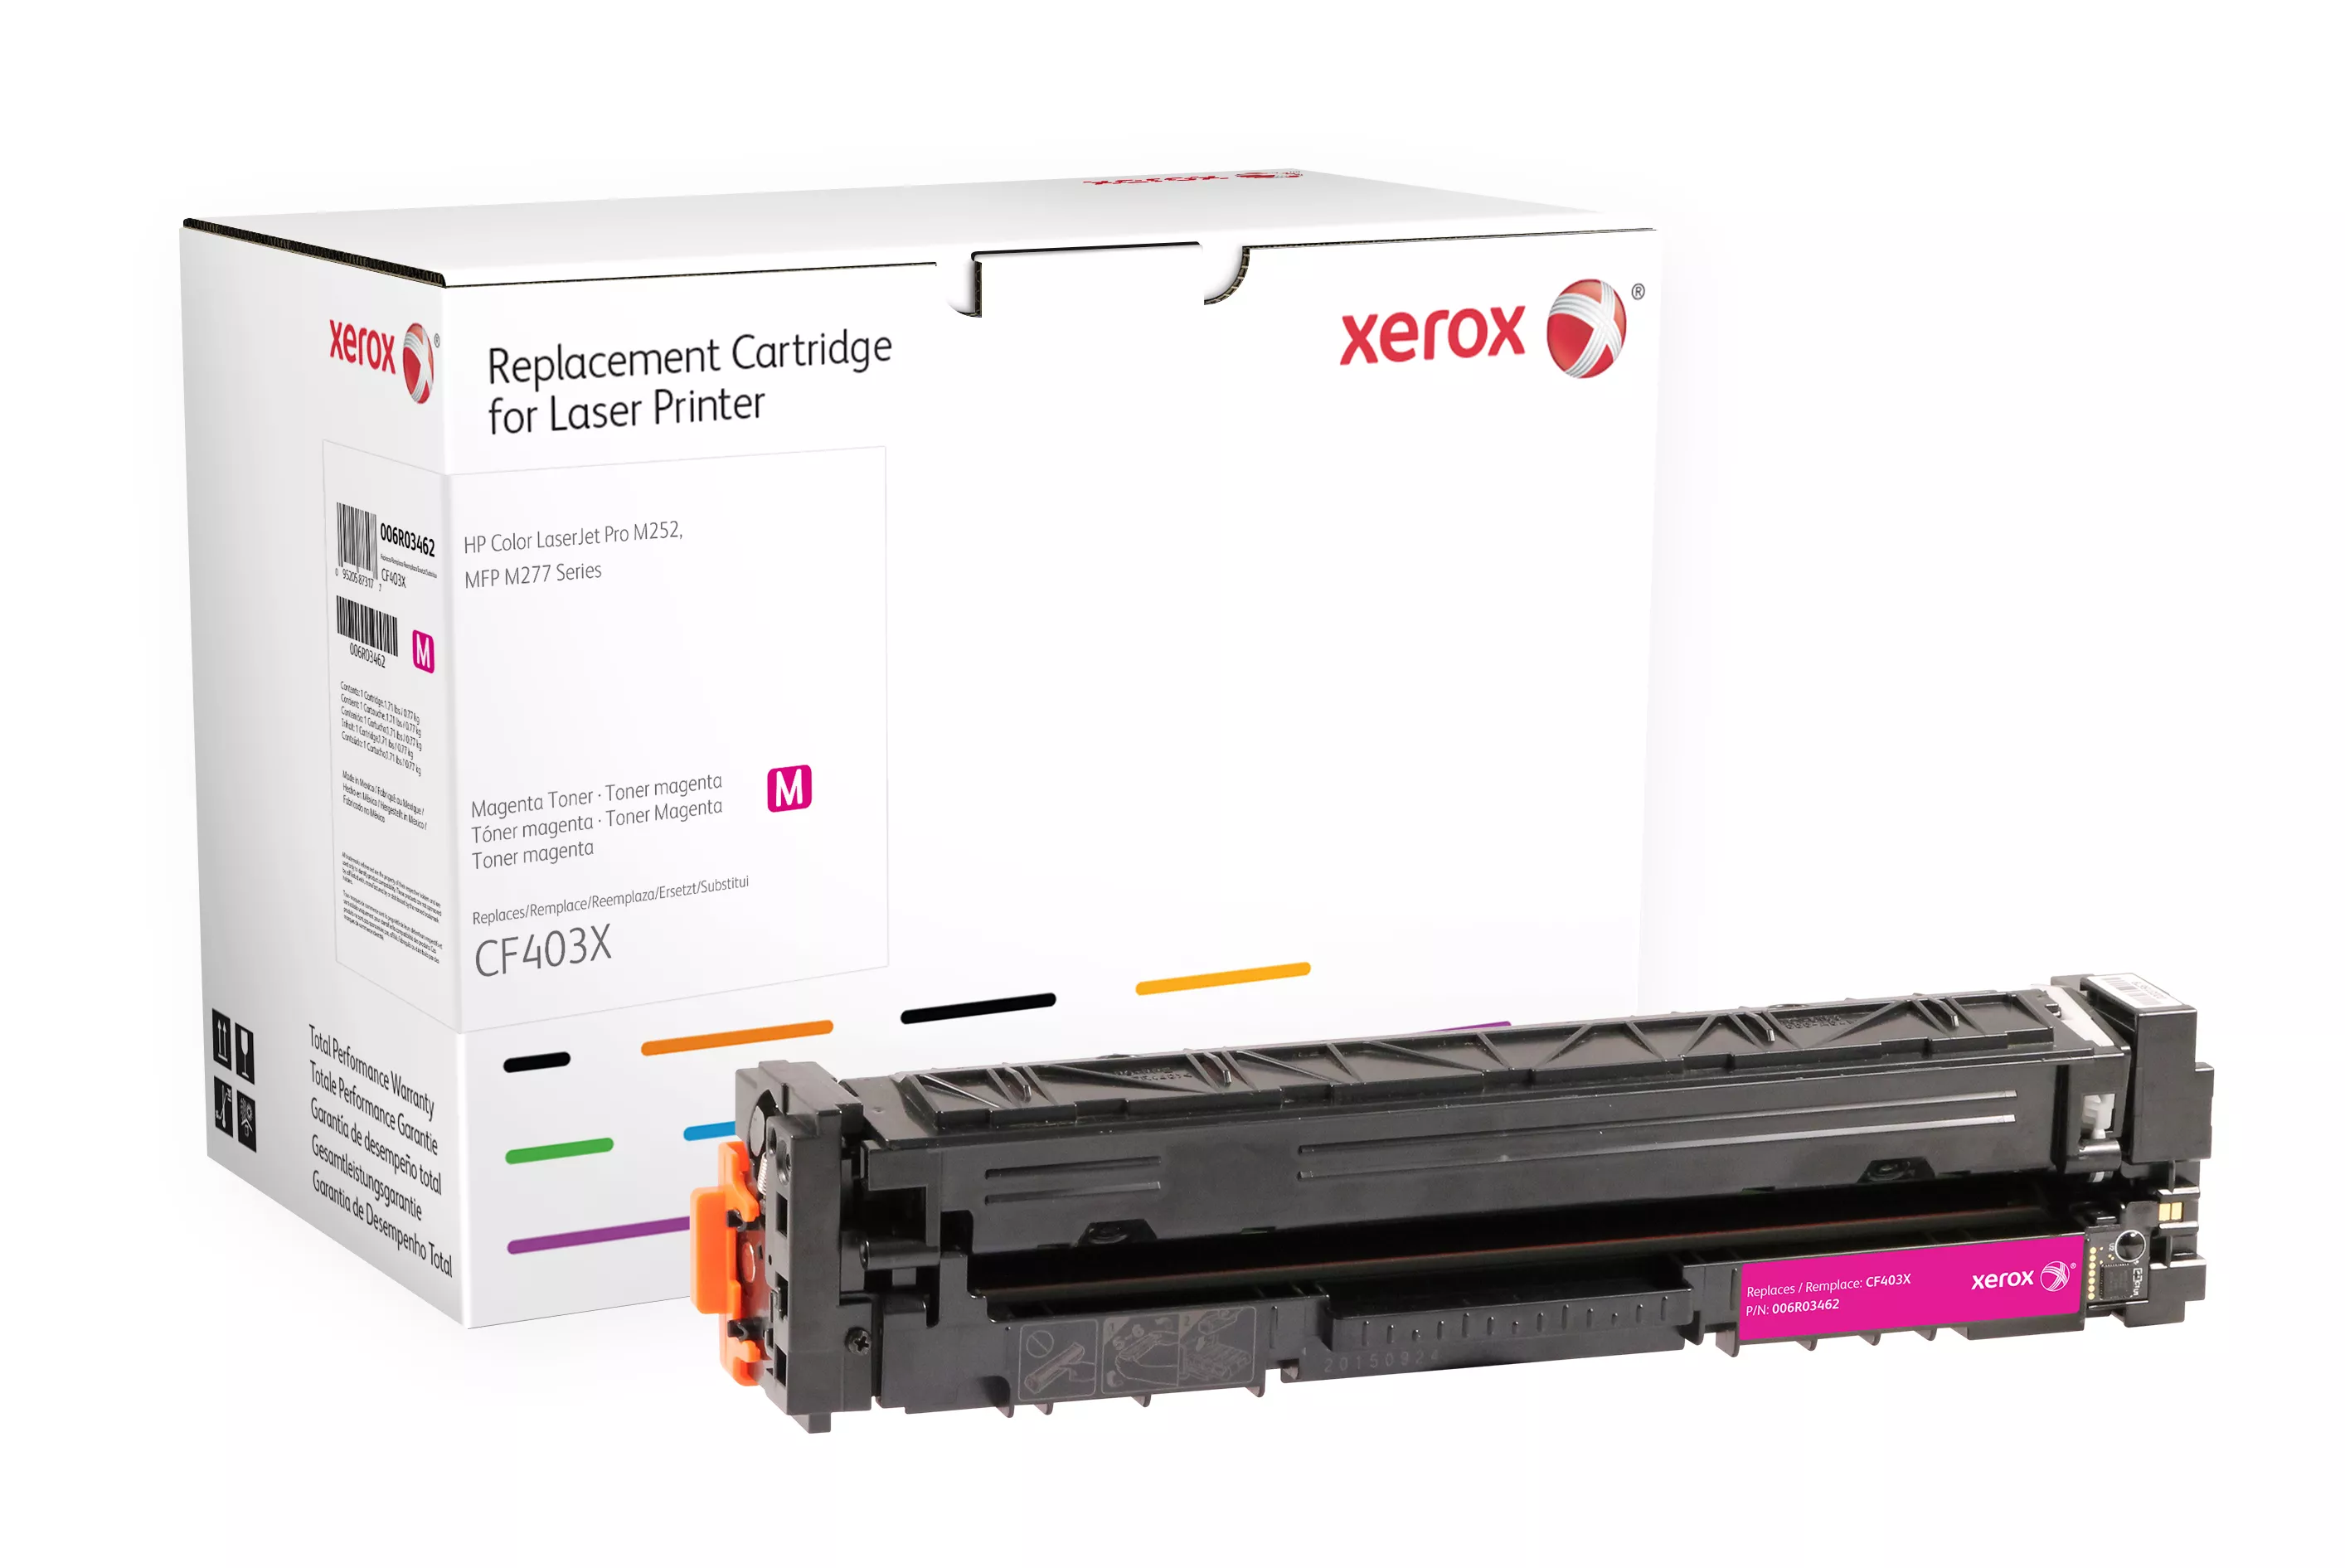 Revendeur officiel Toner Toner remanufacturé Magenta Everyday™ de Xerox compatible